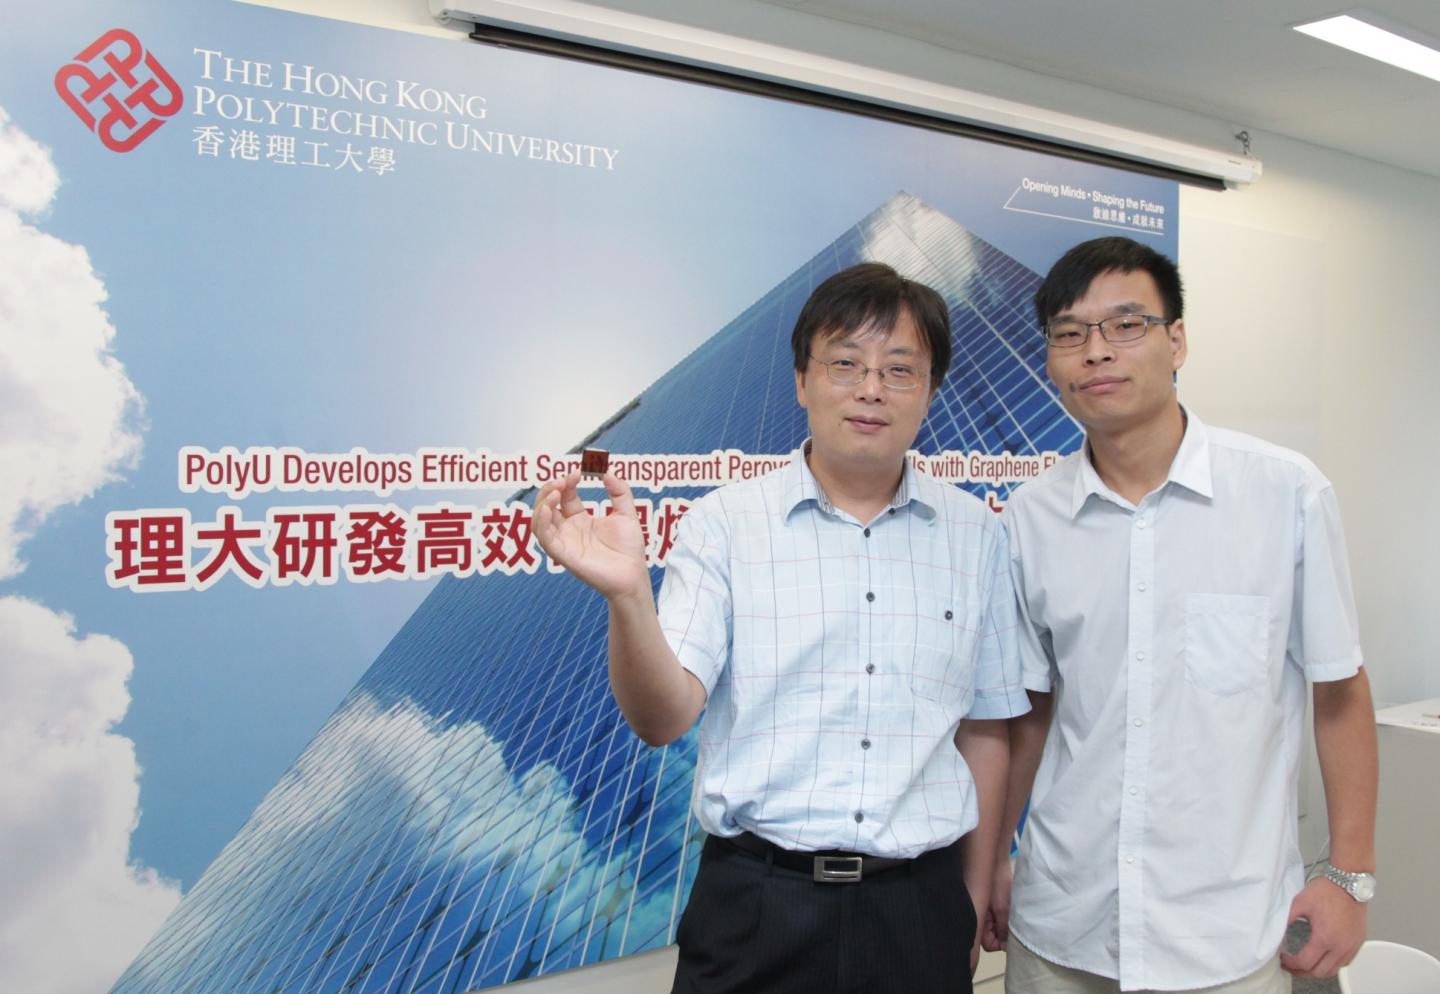 Dr. Yan Feng and You Peng, The Hong Kong Polytechnic University